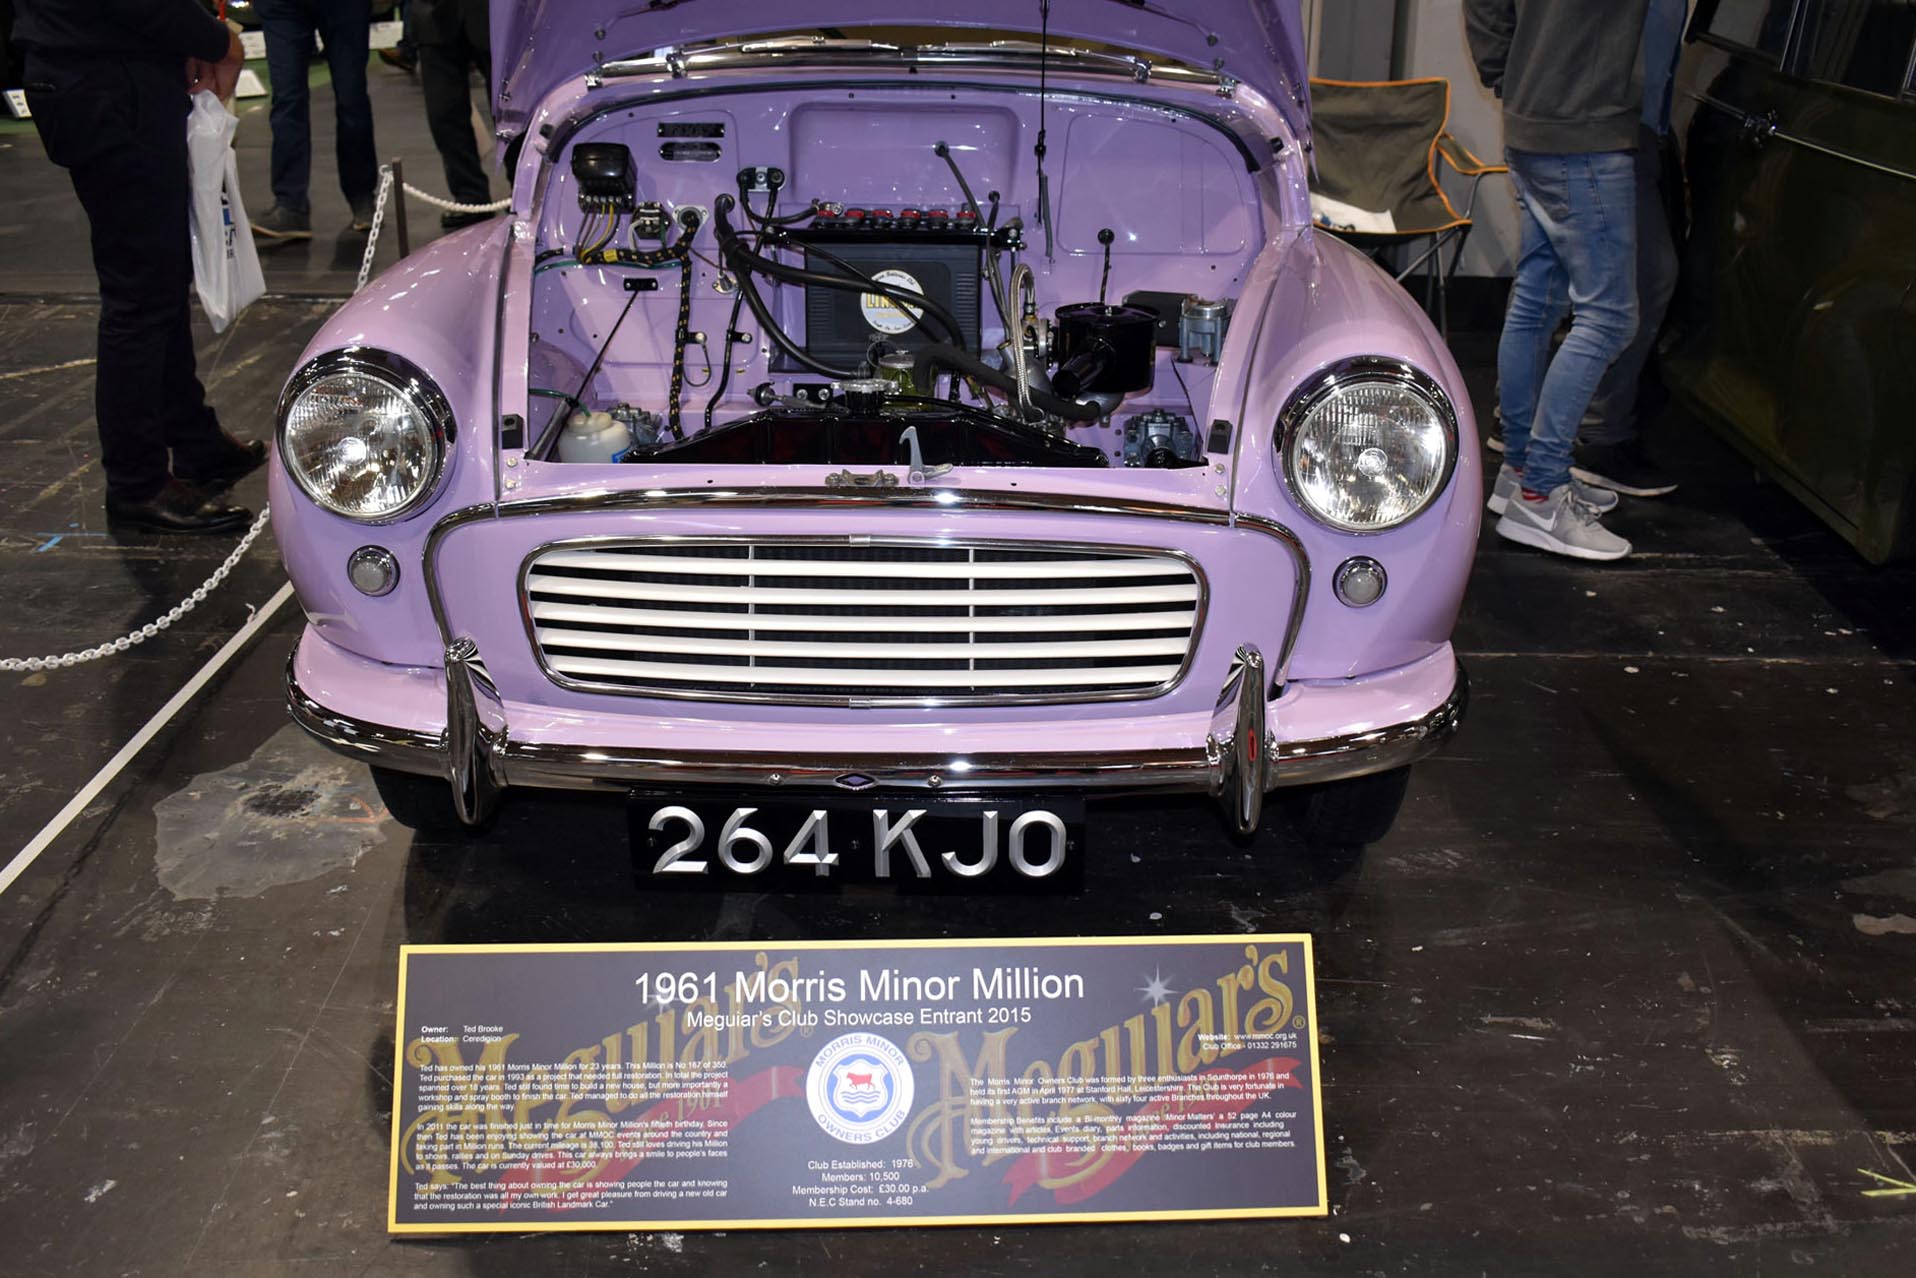 1961 Morris Minor Million